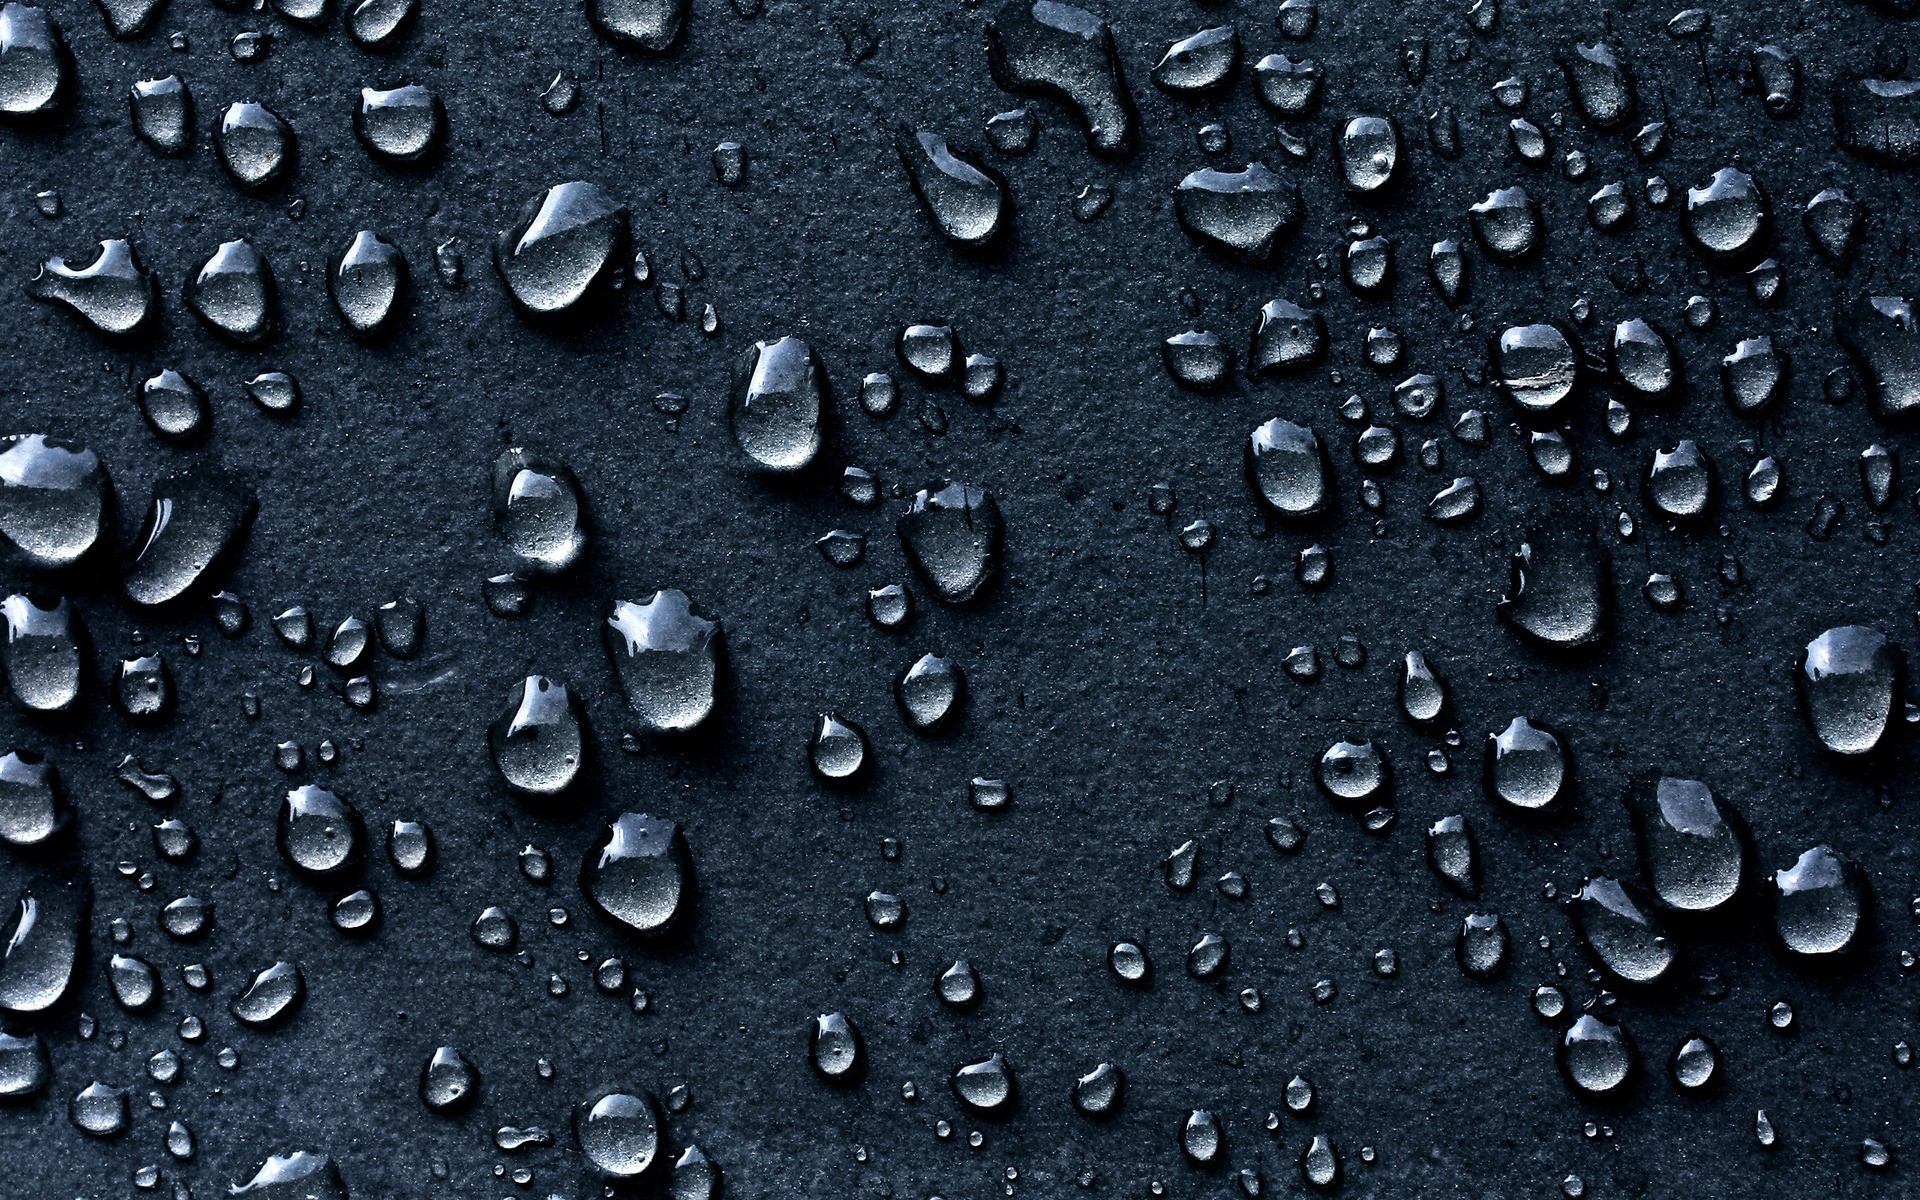 General 1920x1200 minimalism simple background water drops liquid texture